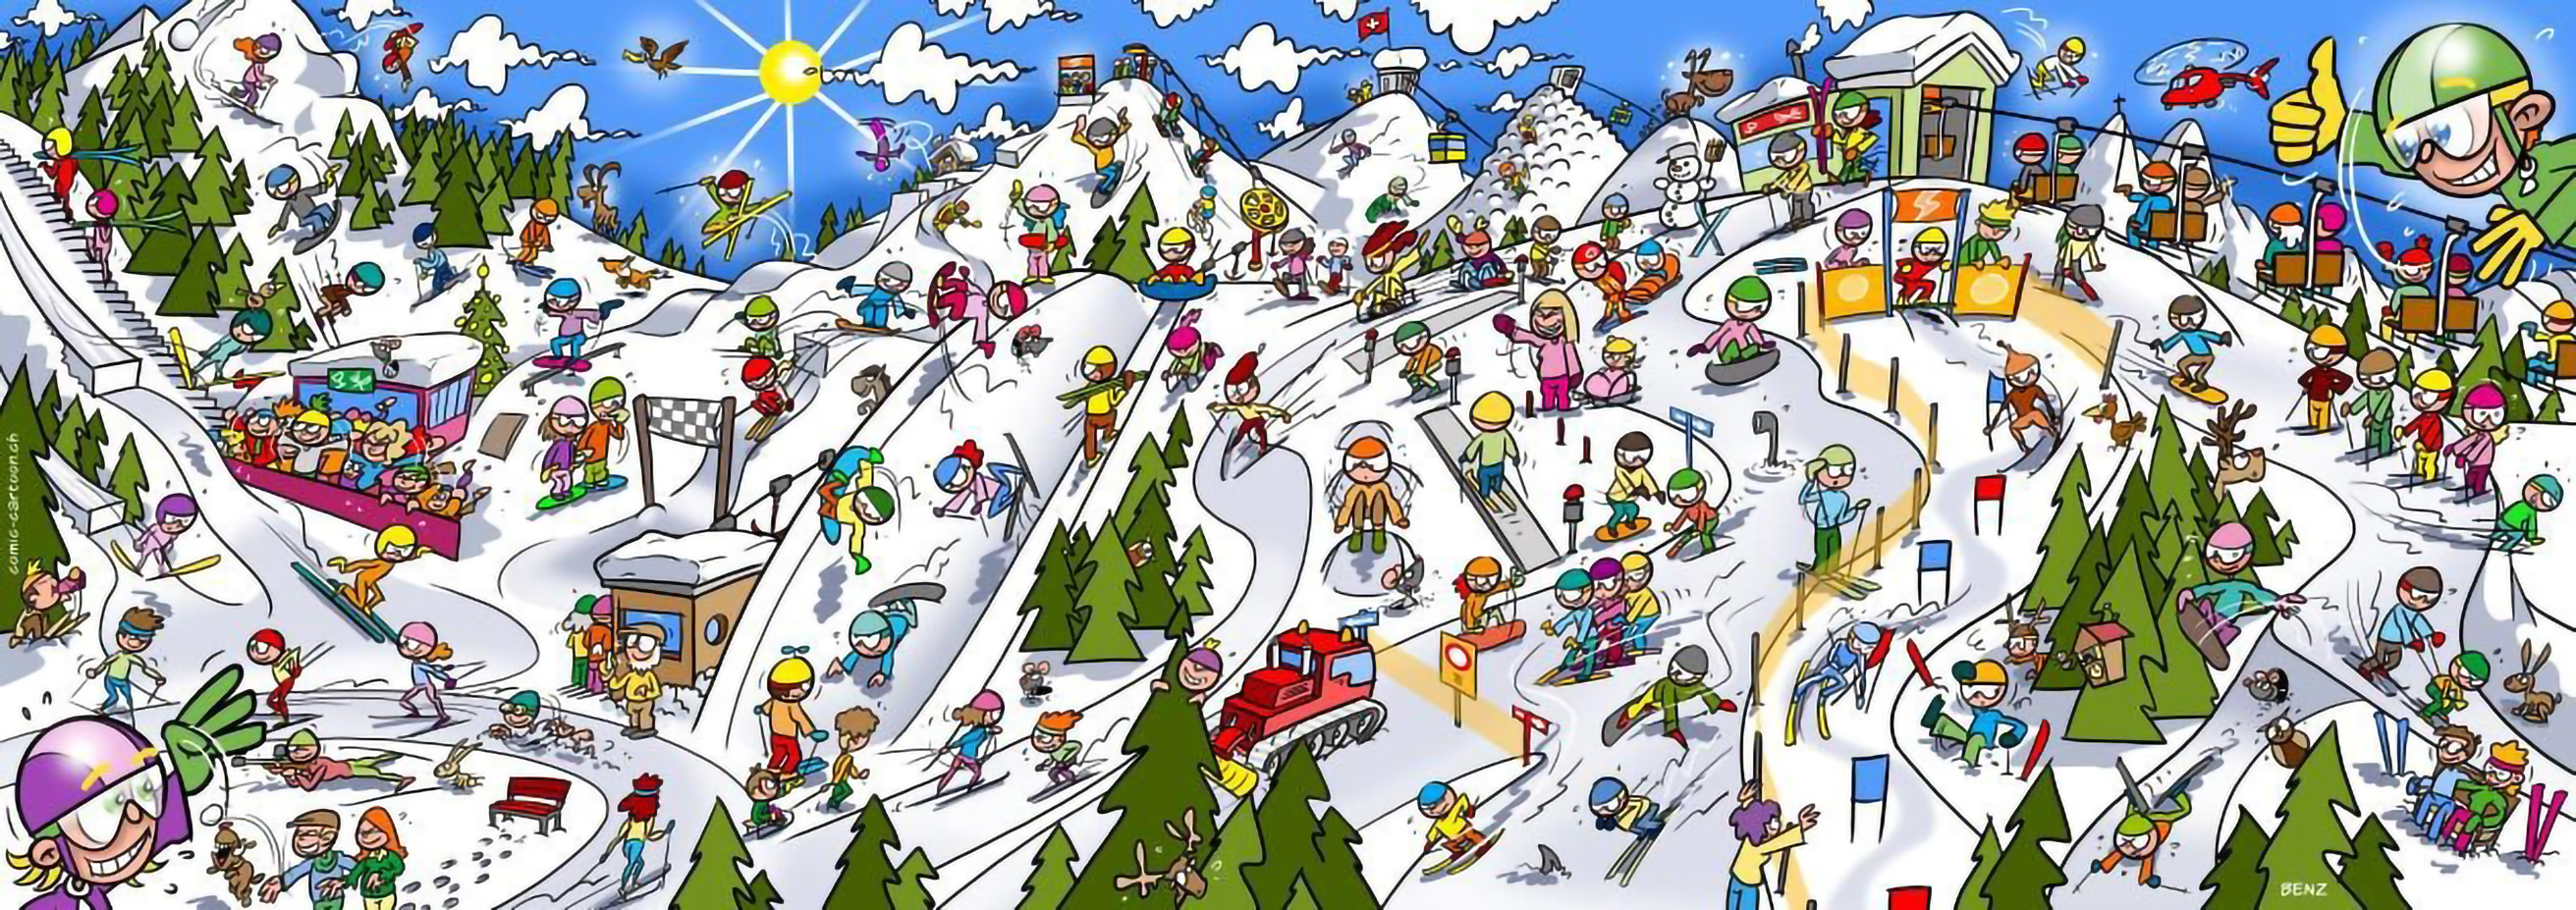 Wimmelbild aus Booklet "Swiss Ski Skills"